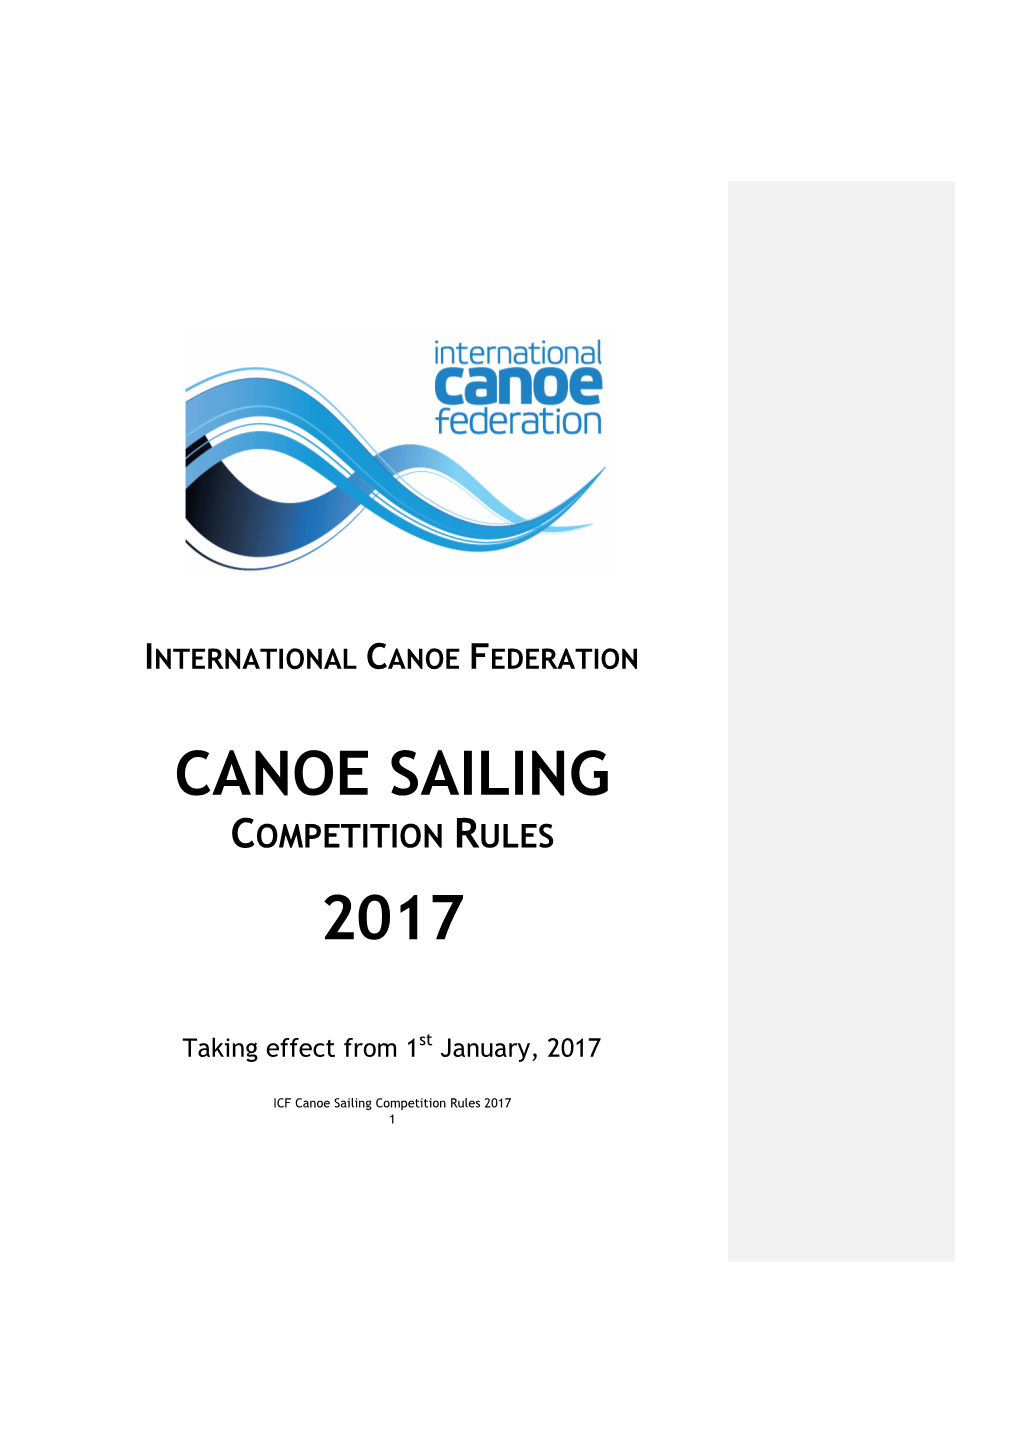 Canoe Sailing 2017